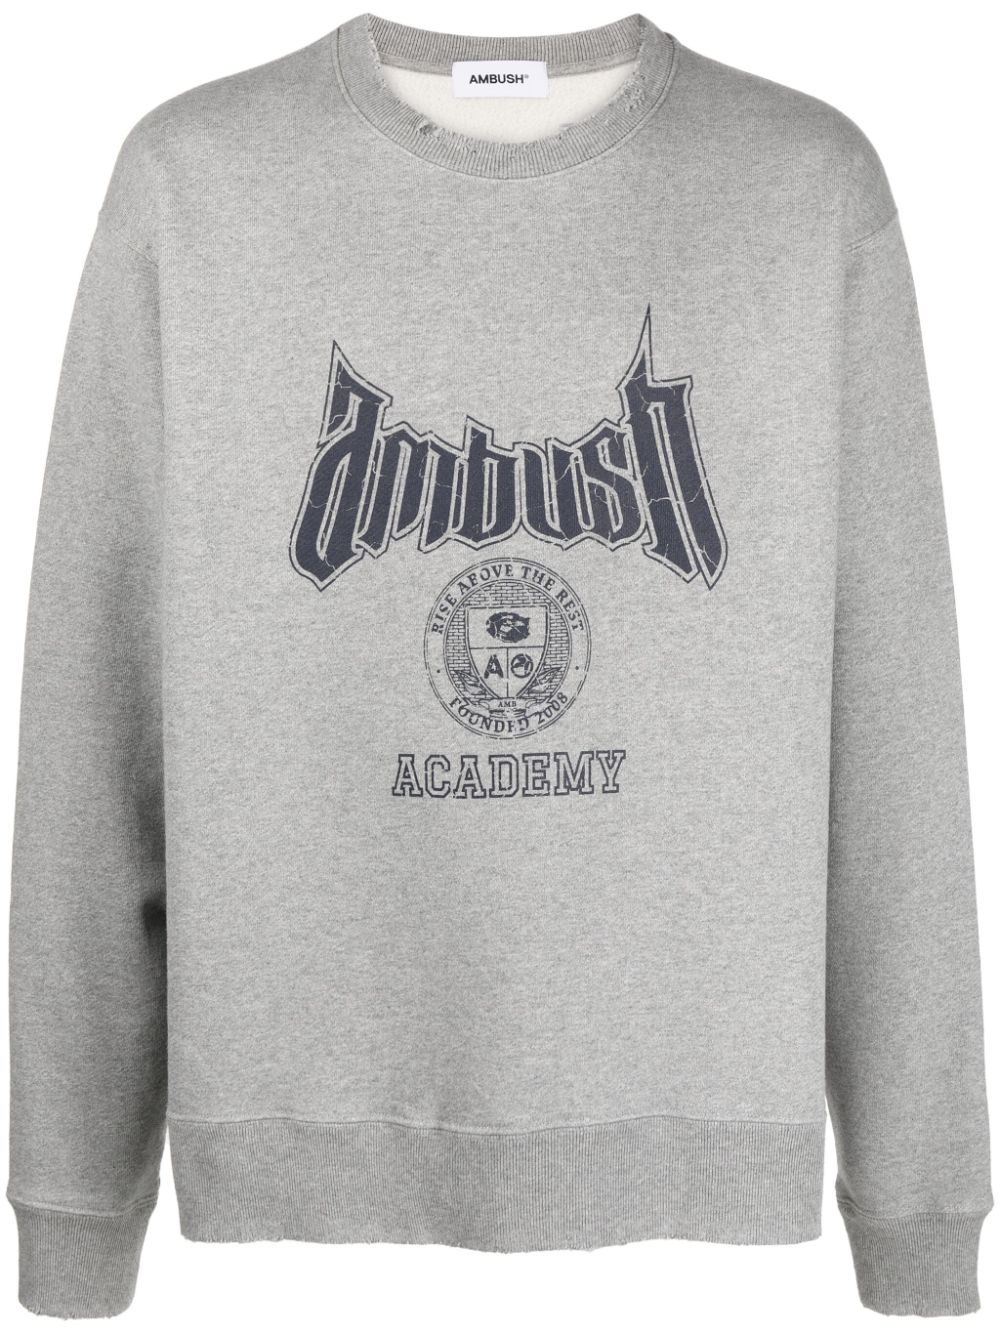 AMBUSH Ambush Academy cotton sweatshirt - Grey von AMBUSH